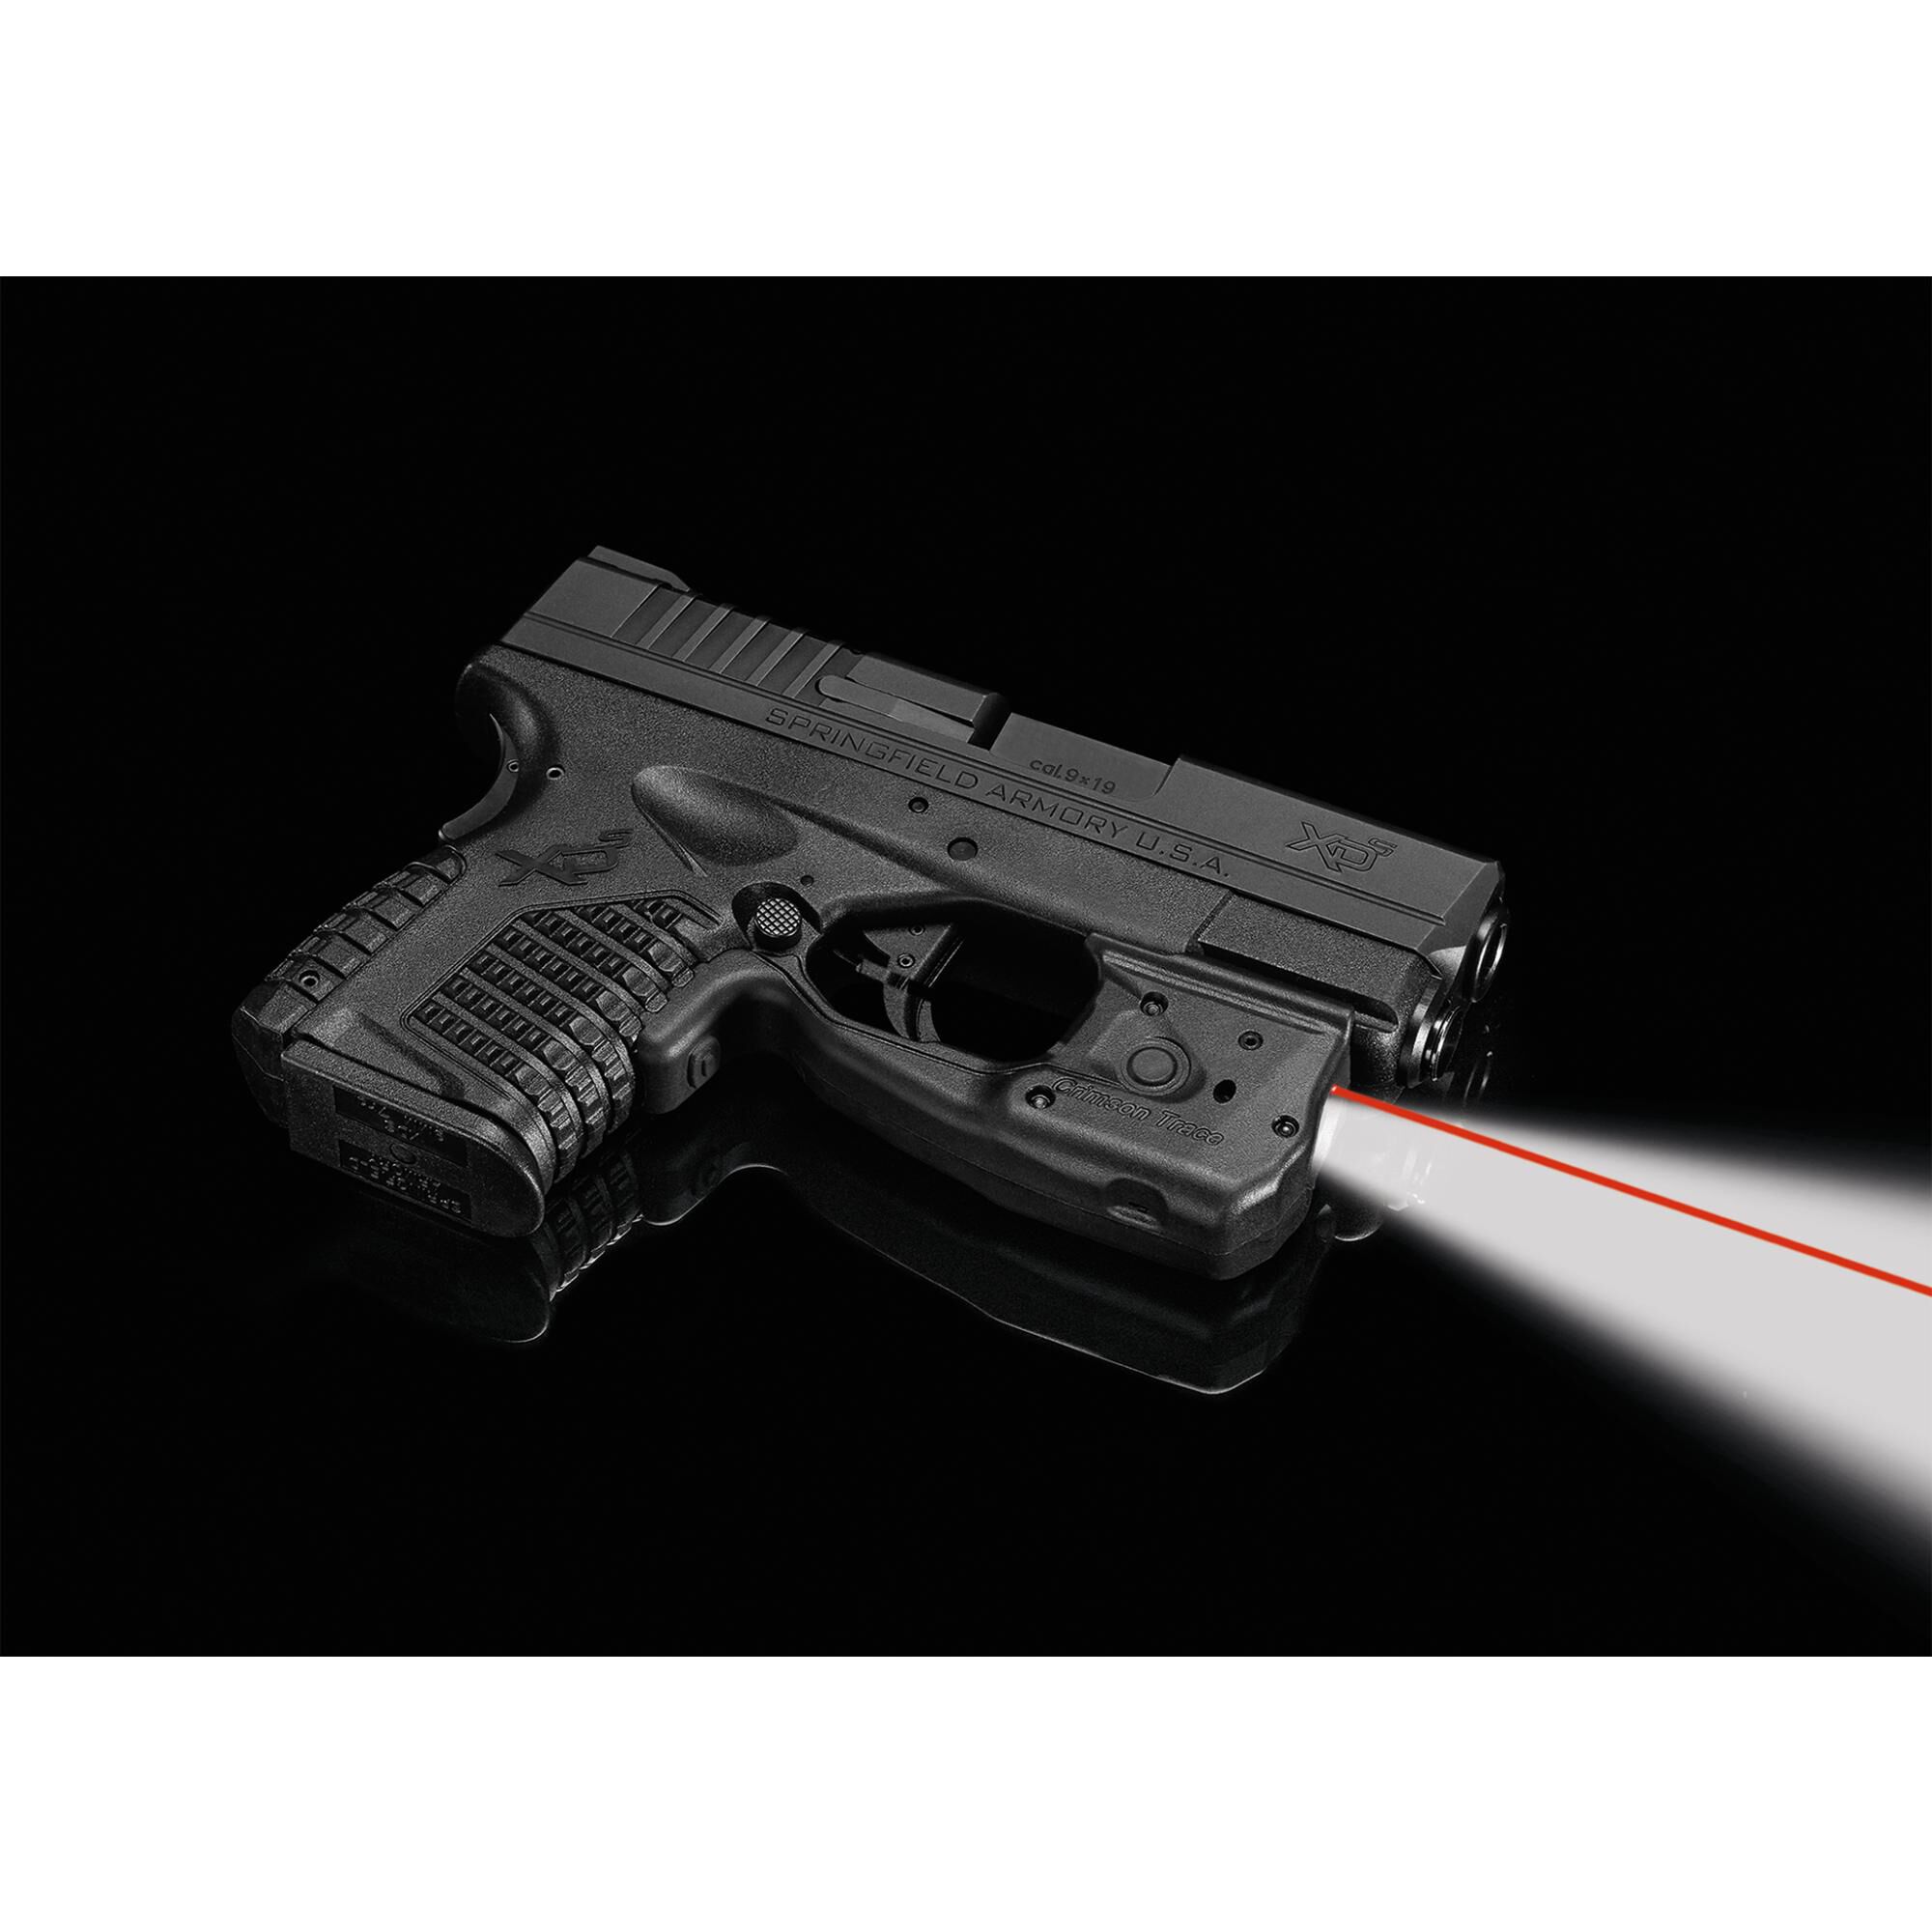 Crimson Trace Corporation Laserguard Pro Springfield XDS Cmtll802 for sale online 